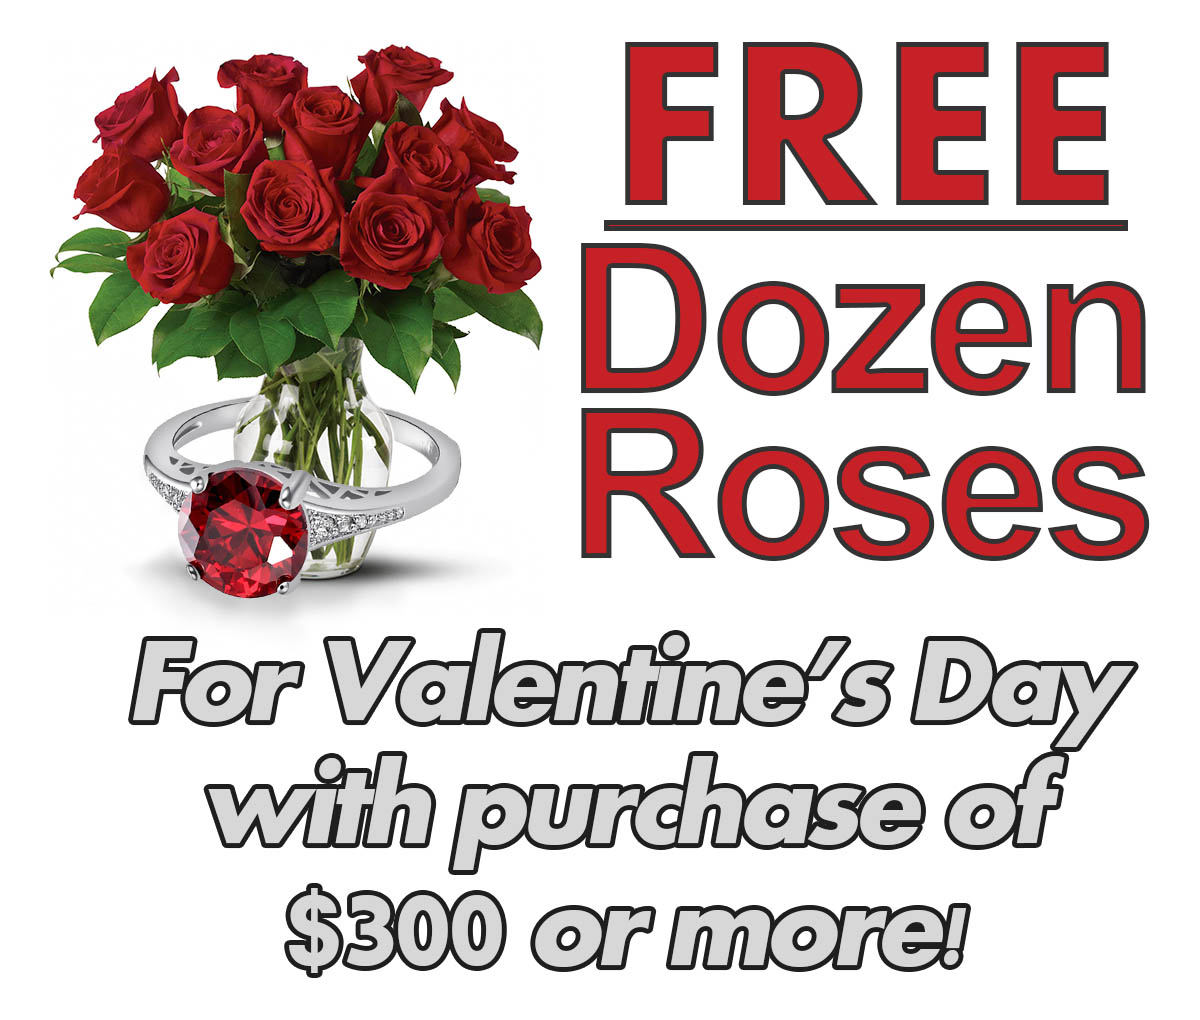 Free Dozen Roses - Valentines Day - 2017